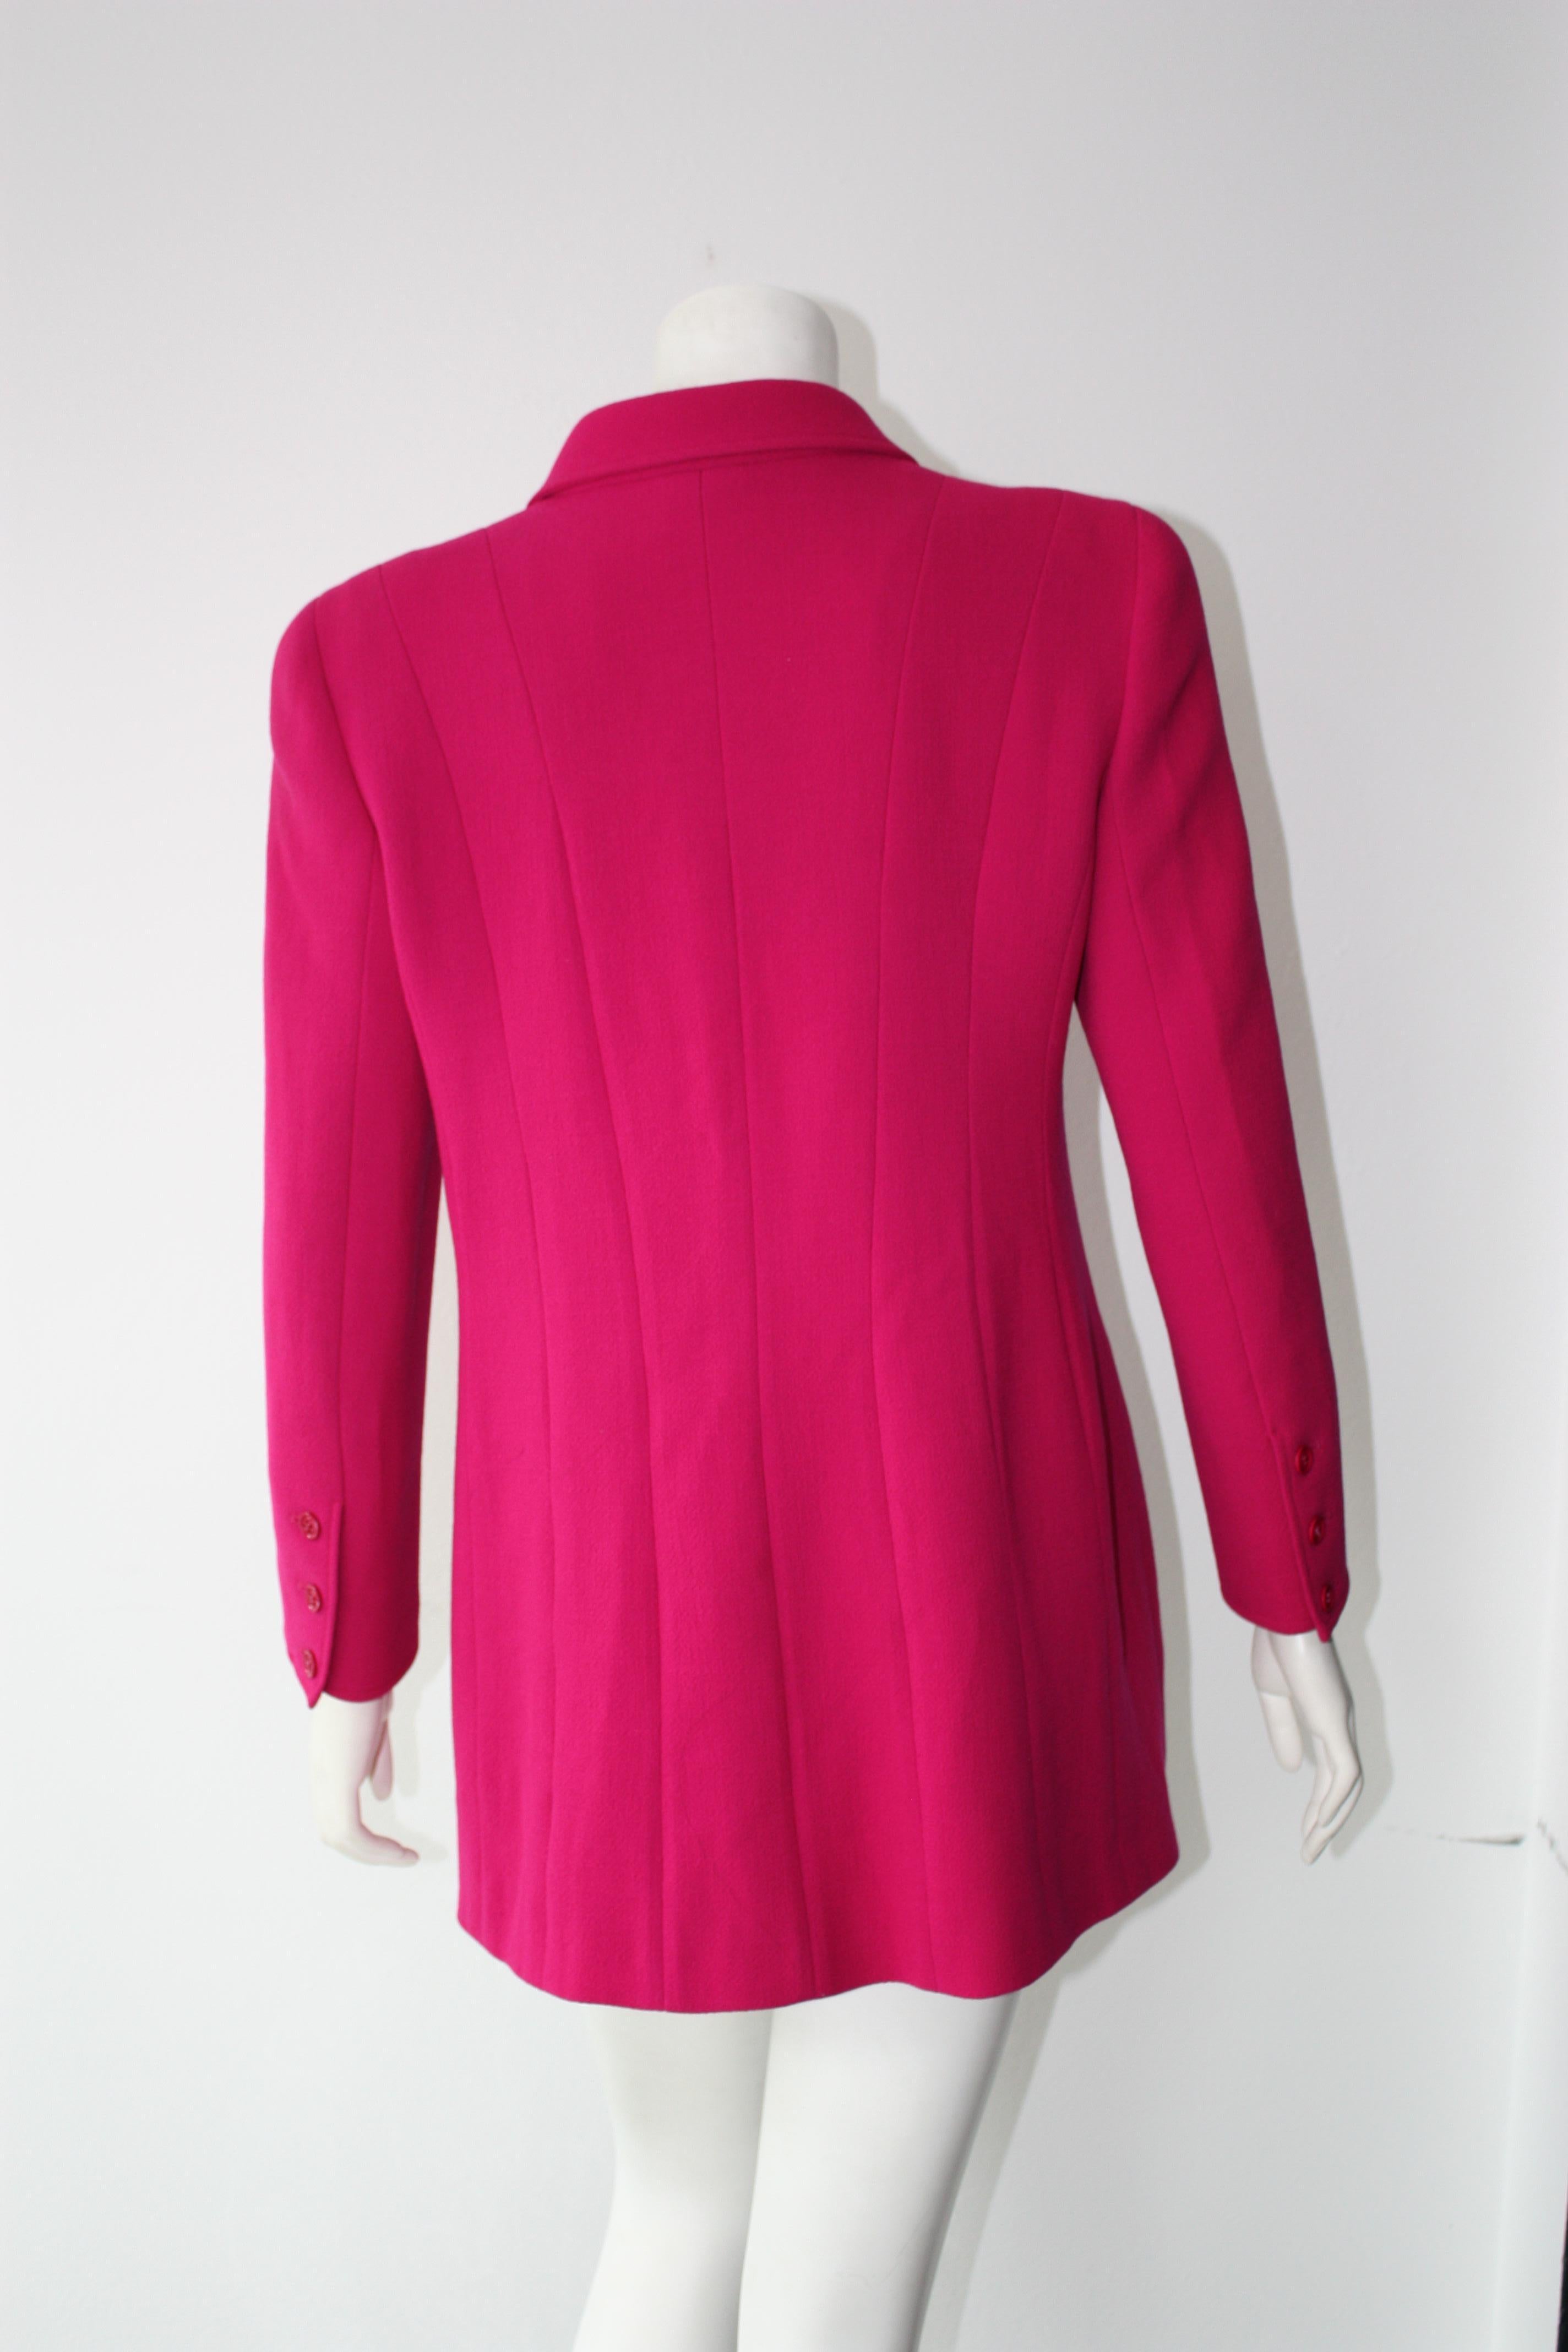 1985 CHANEL Fuchsia Single Breasted Vintage Jacket Size 42 3